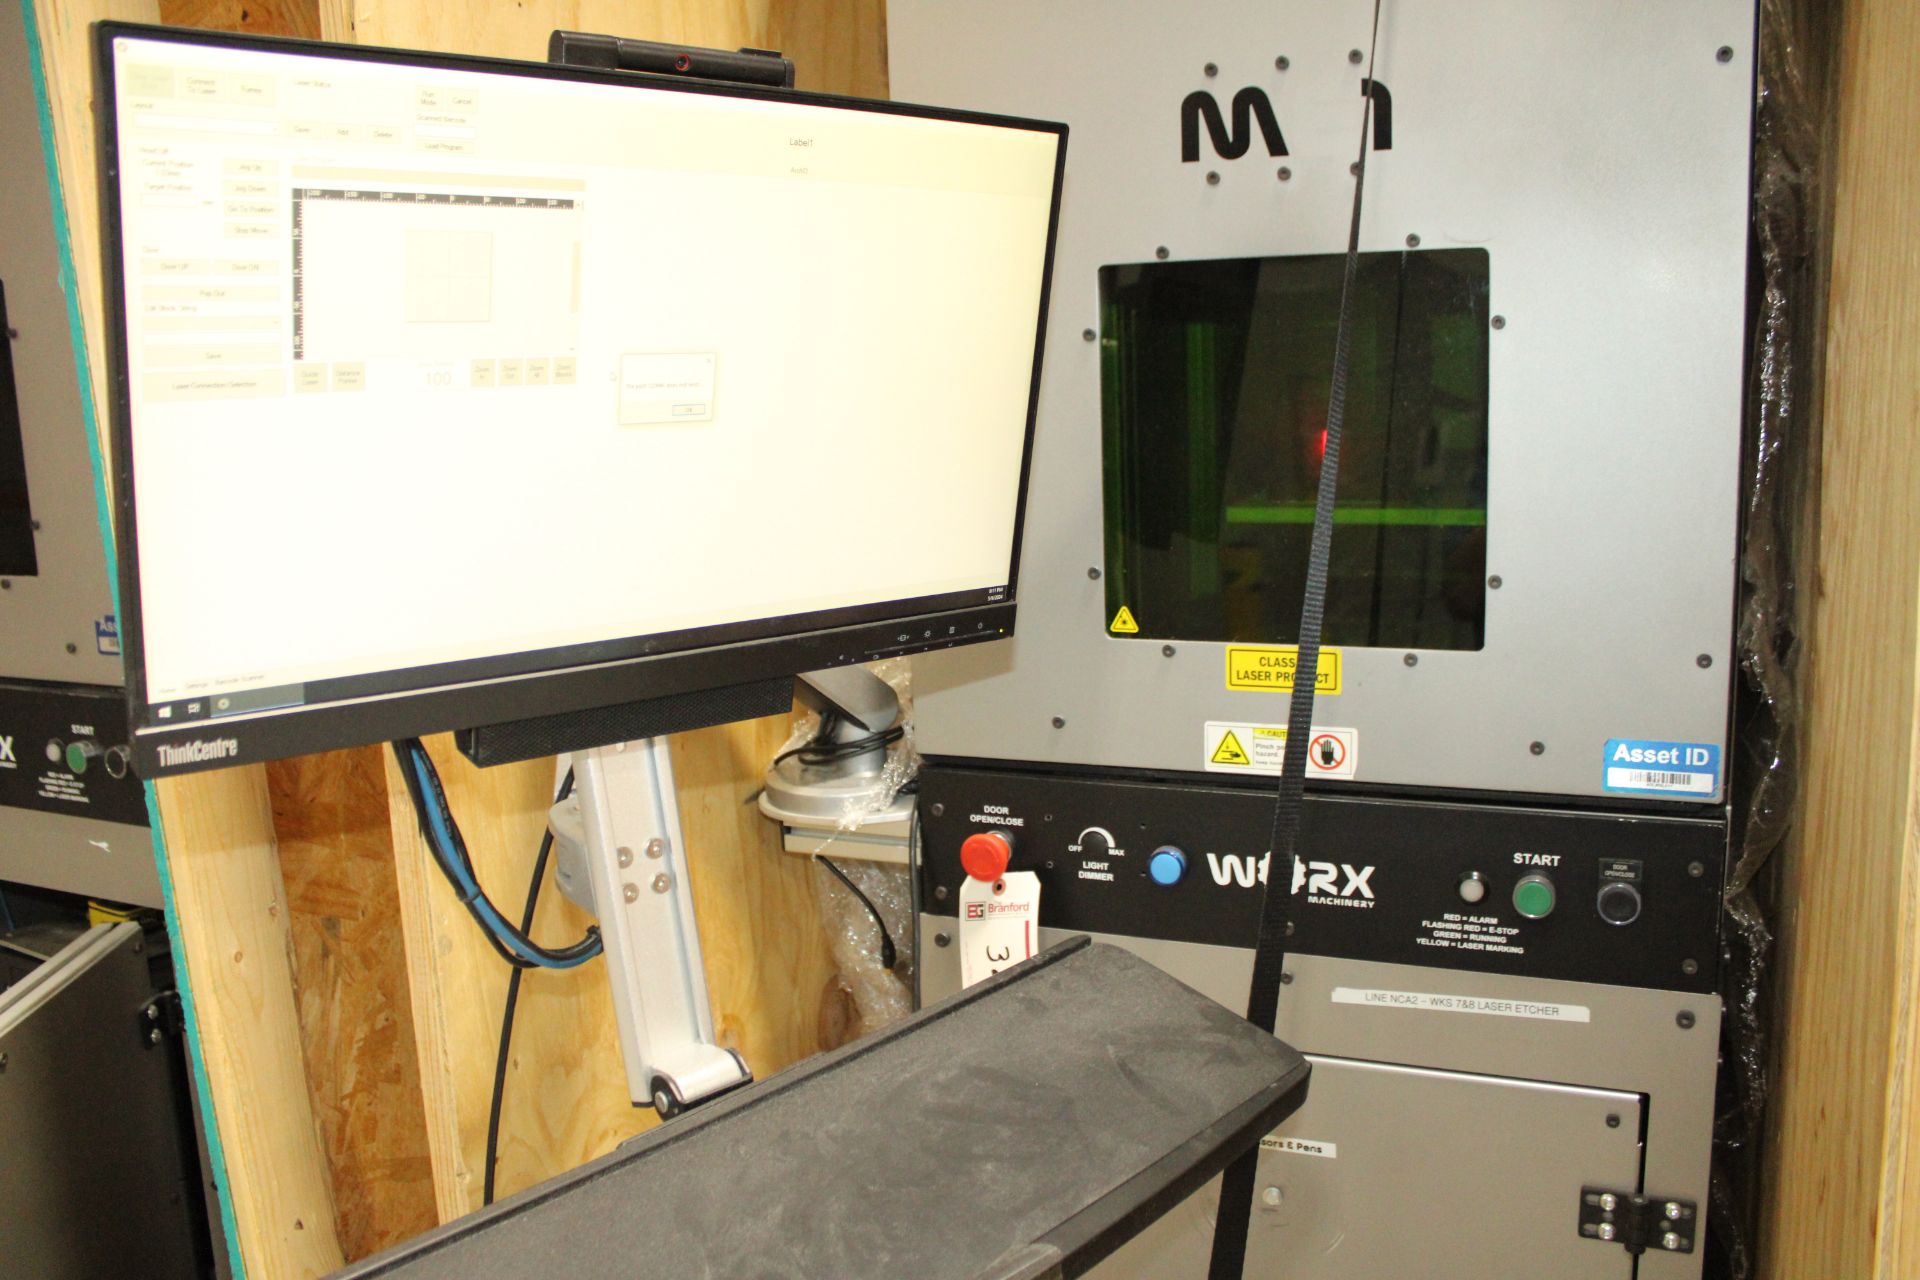 Keyence MD-F3200C 3-Axis Marking Laser w/ WORX ME1 Enclosure - Image 10 of 10